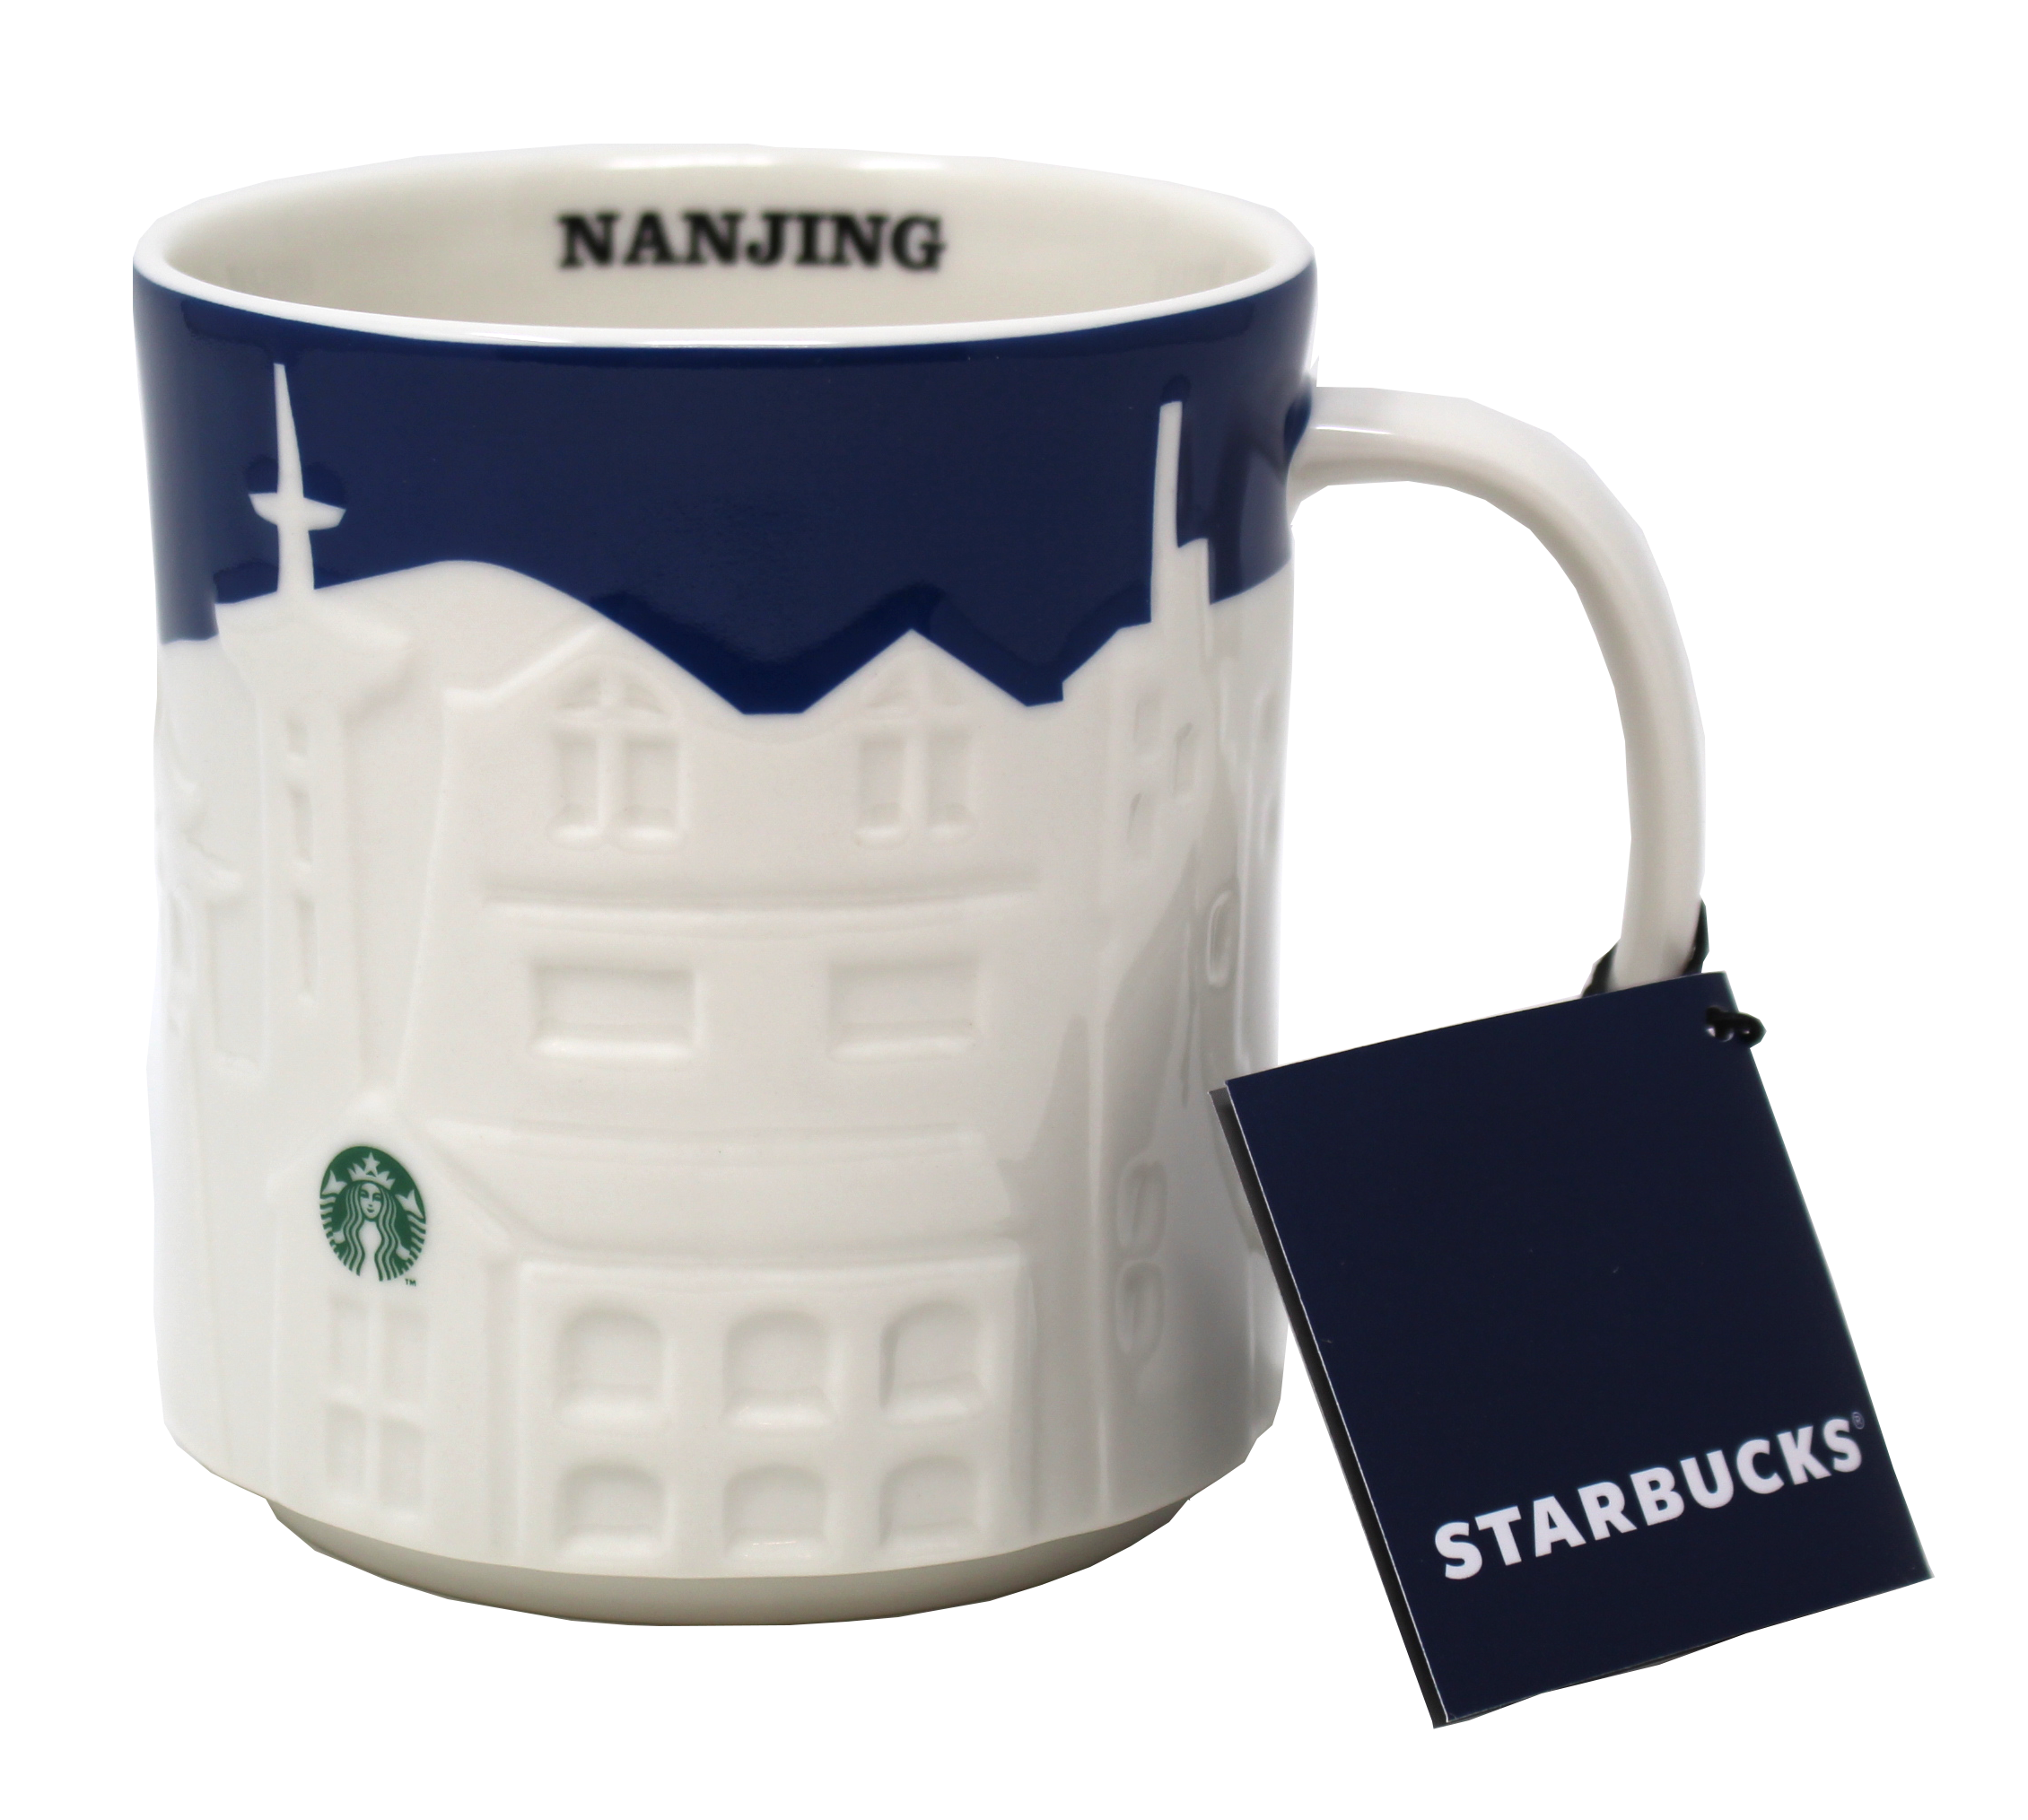 Starbucks Collector Relief Series Nanjing Ceramic Mug, 16 Oz